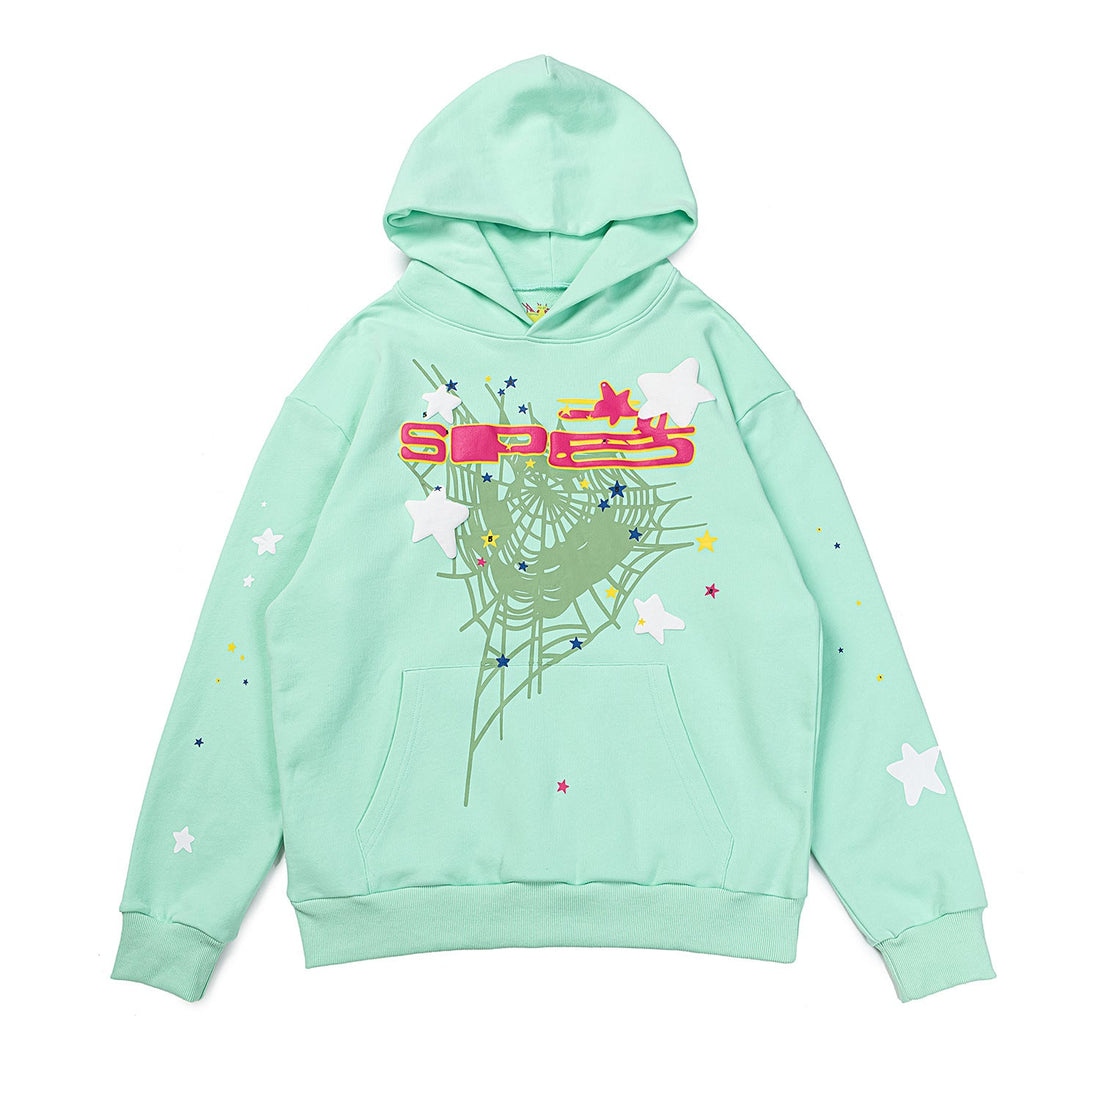 Fresh Mint Green Sp5der Hoodie - Trendy Web and Star Print Hooded Sweatshirt - Seakoff